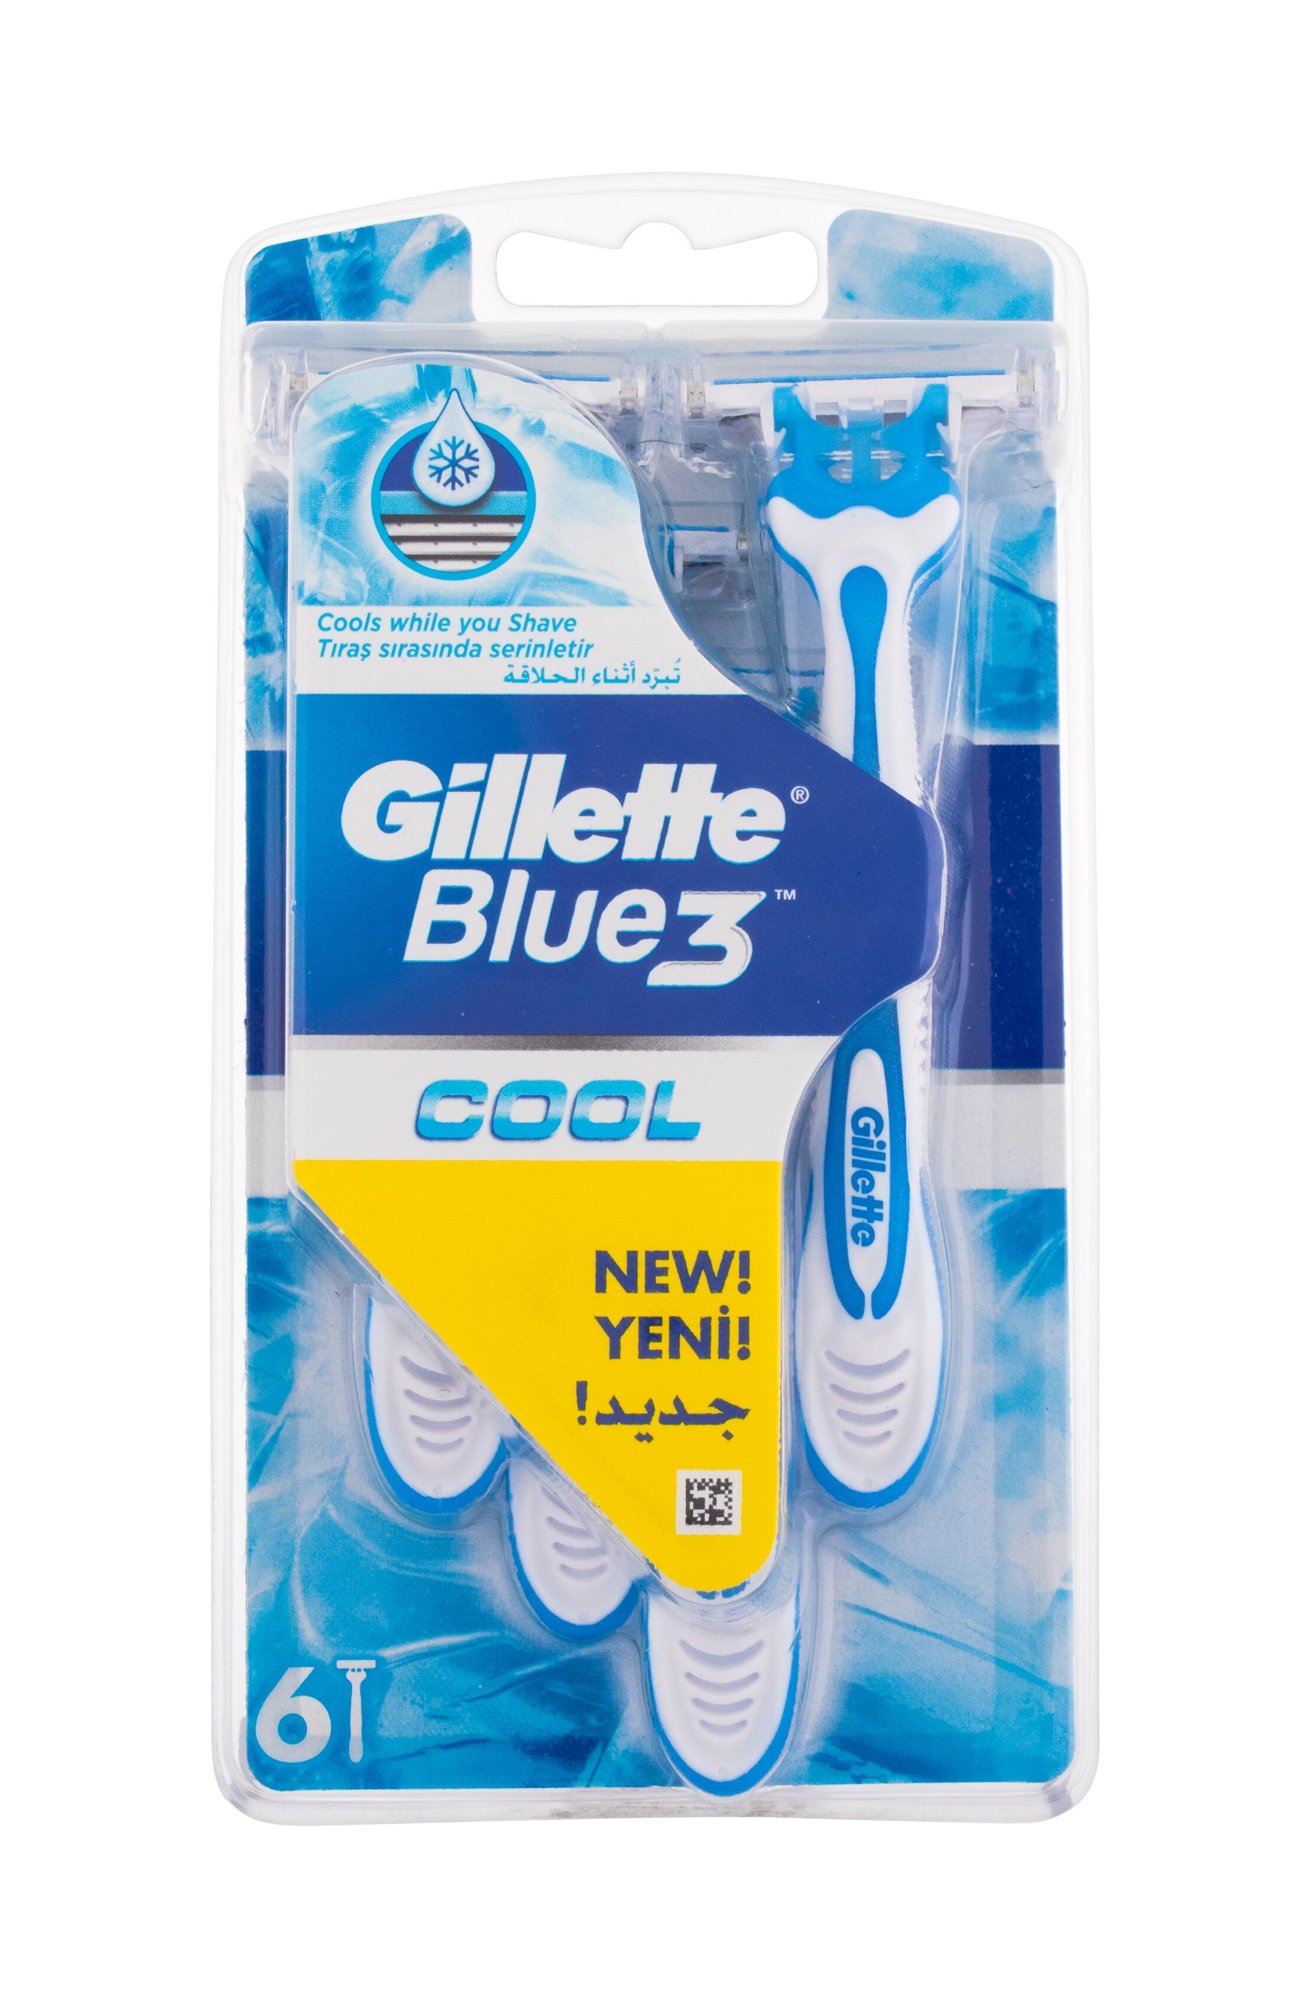 Gillette Blue3 Cool skustuvas